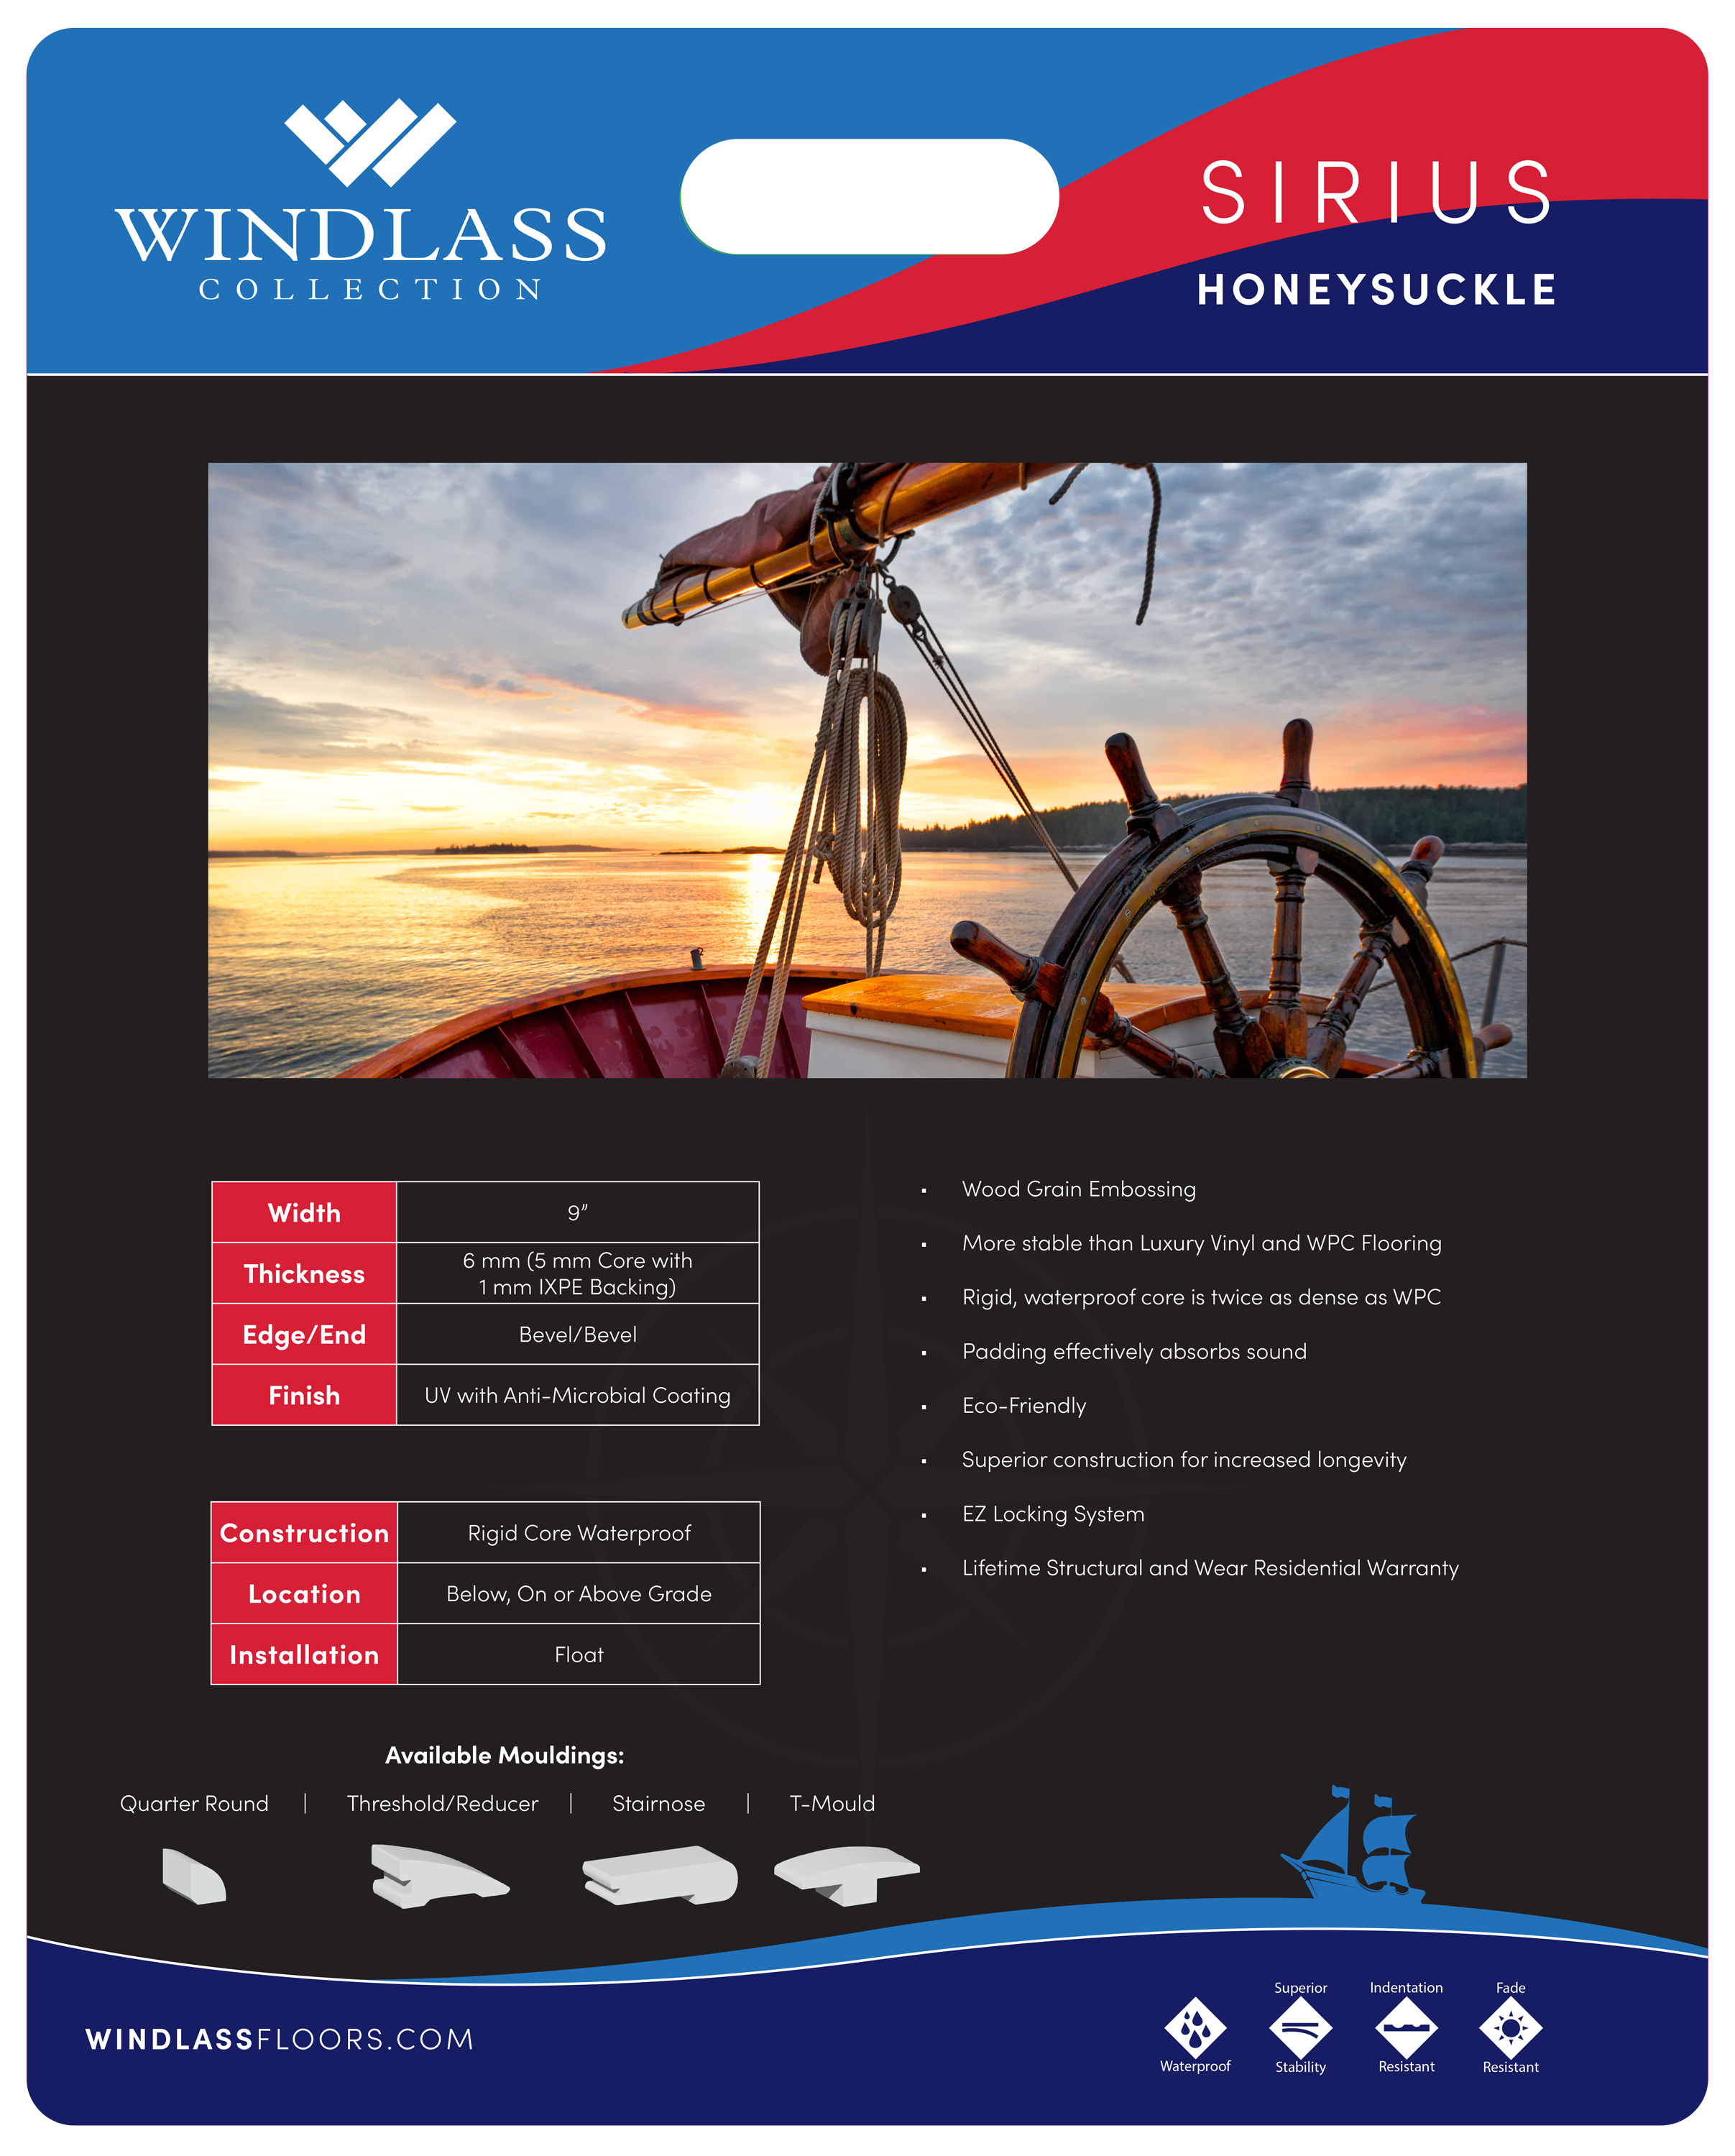 Windlass-Displayboard-SIRIUS.png